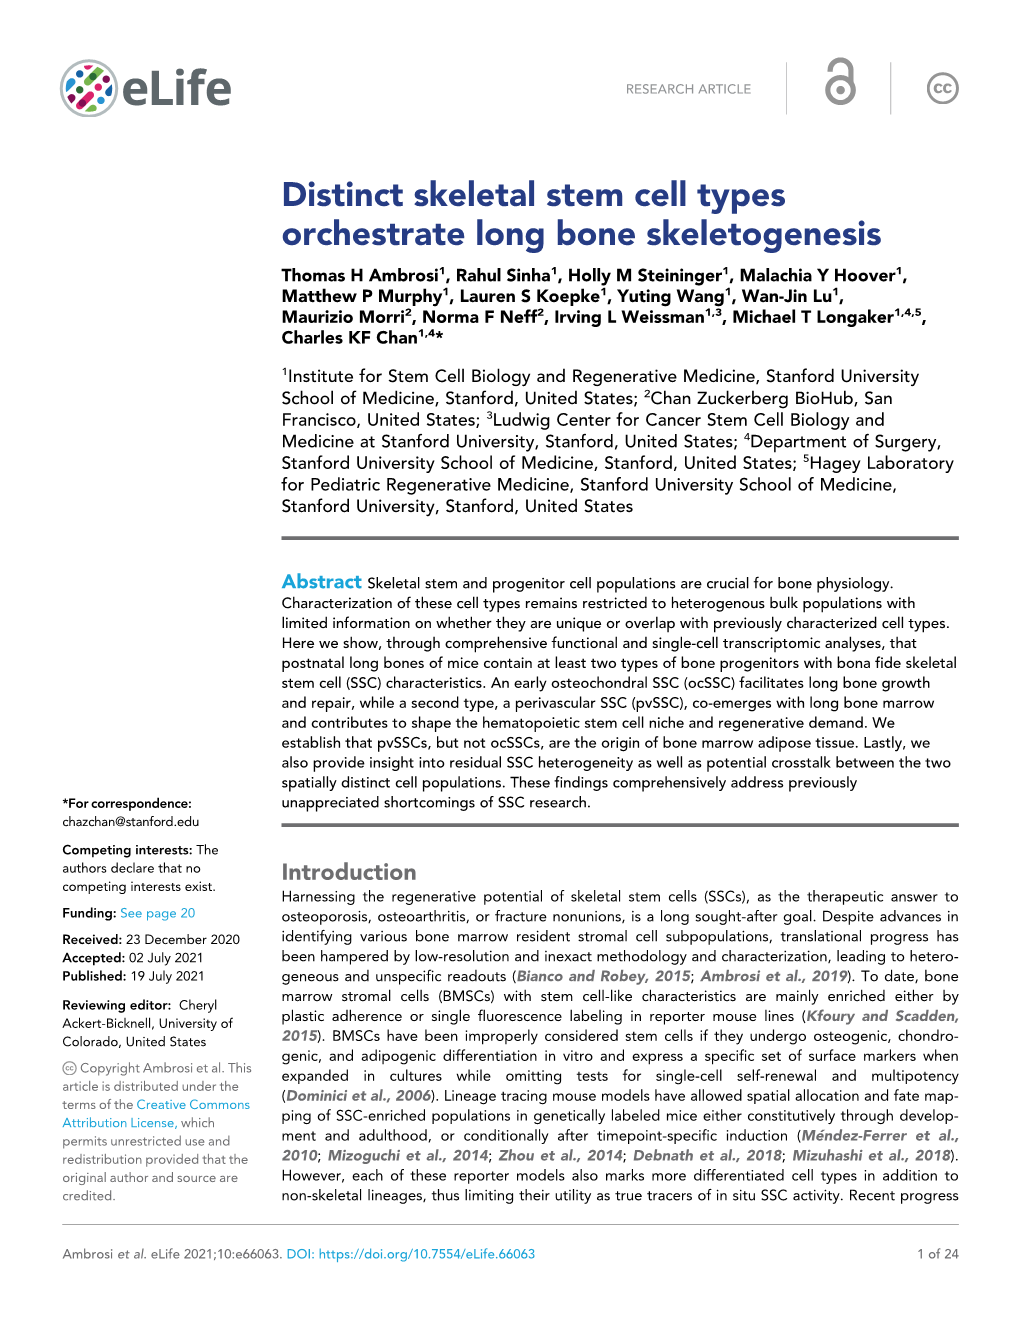 Distinct Skeletal Stem Cell Types Orchestrate Long Bone Skeletogenesis